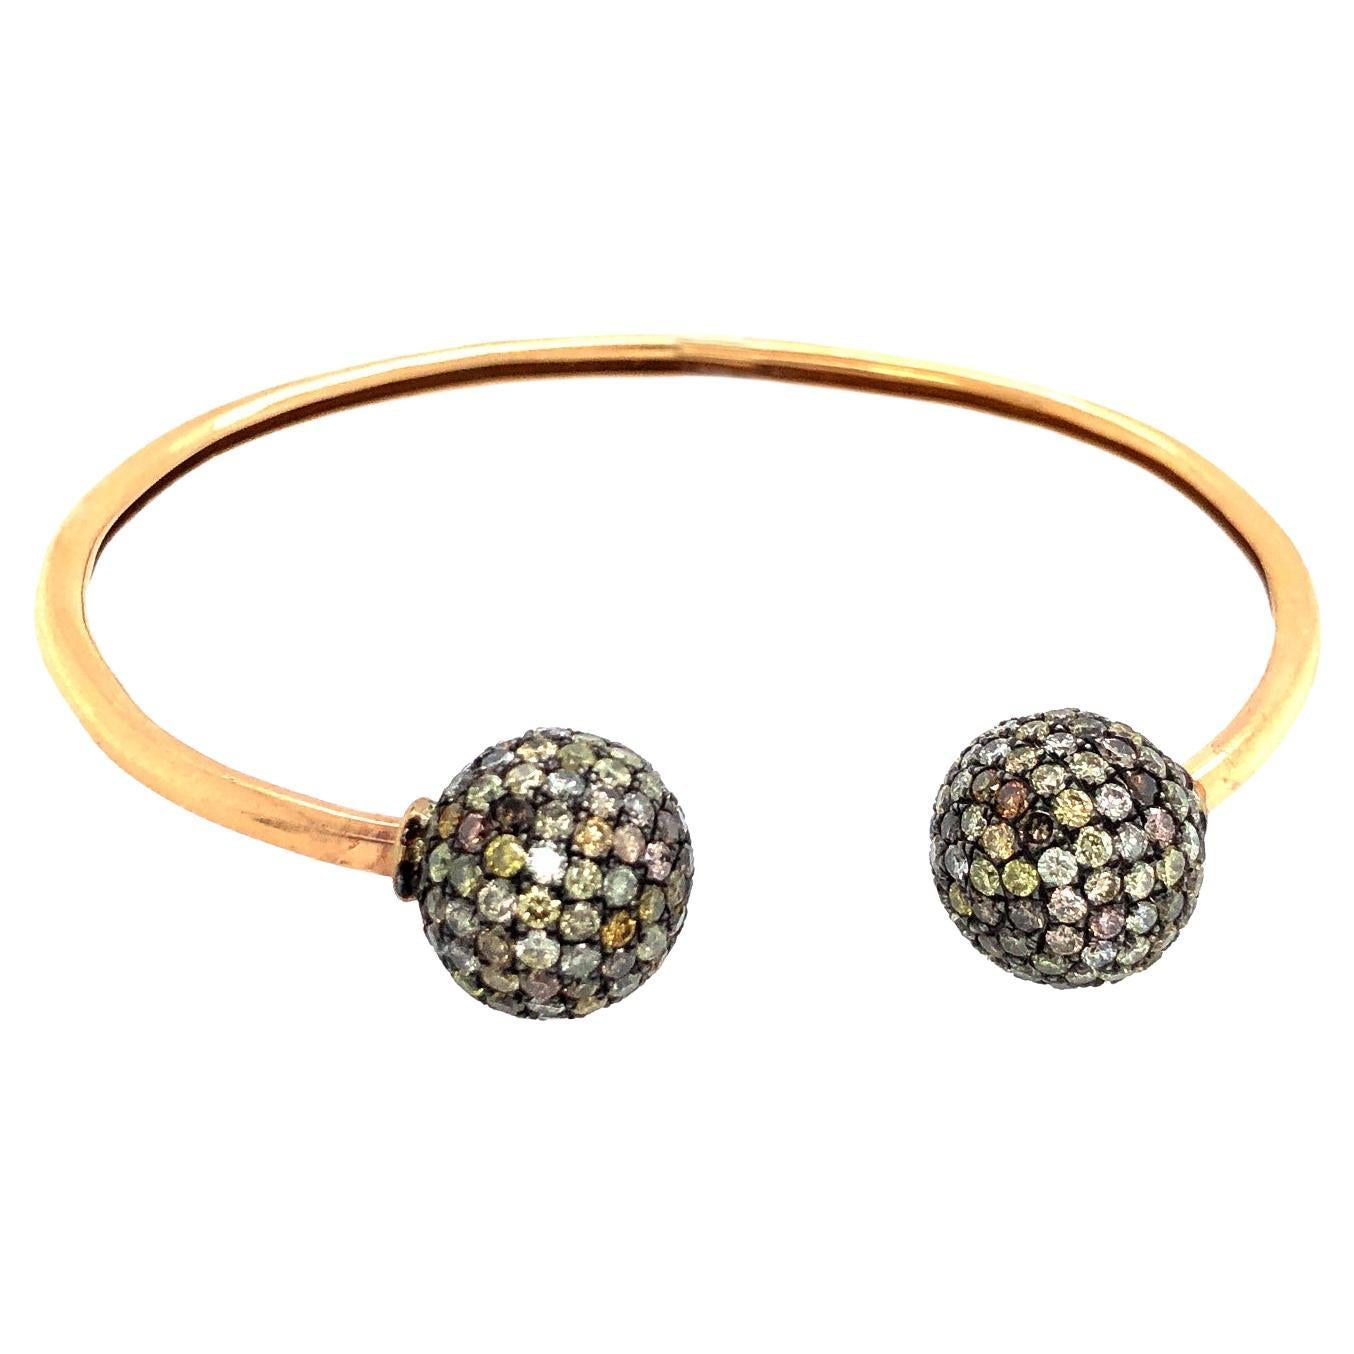 Fancy Pave Diamond Ball Adjustable Bracelet Made In 18k Gold & Silver